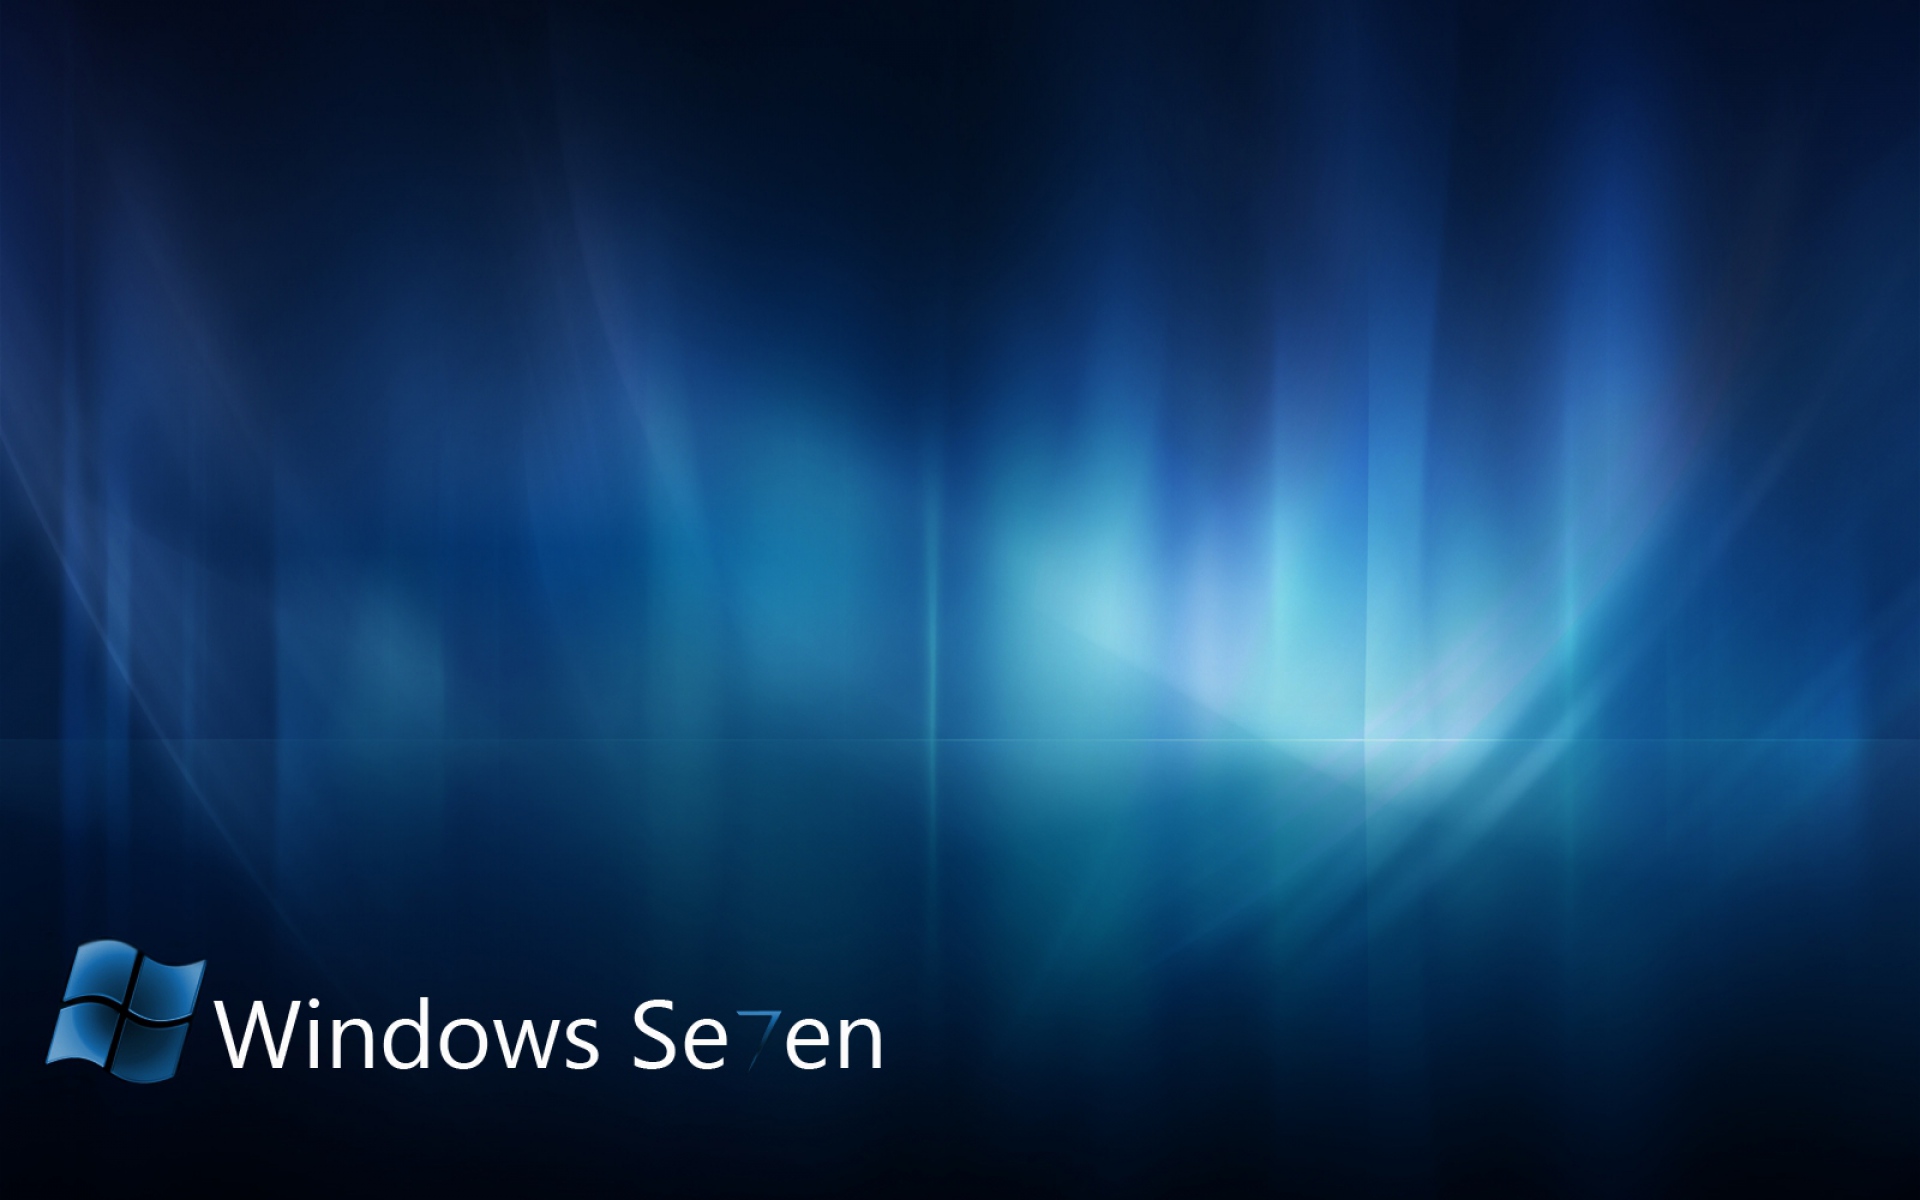 Картинки Windows 7, os, логотип, белый, синий фото и обои на рабочий стол